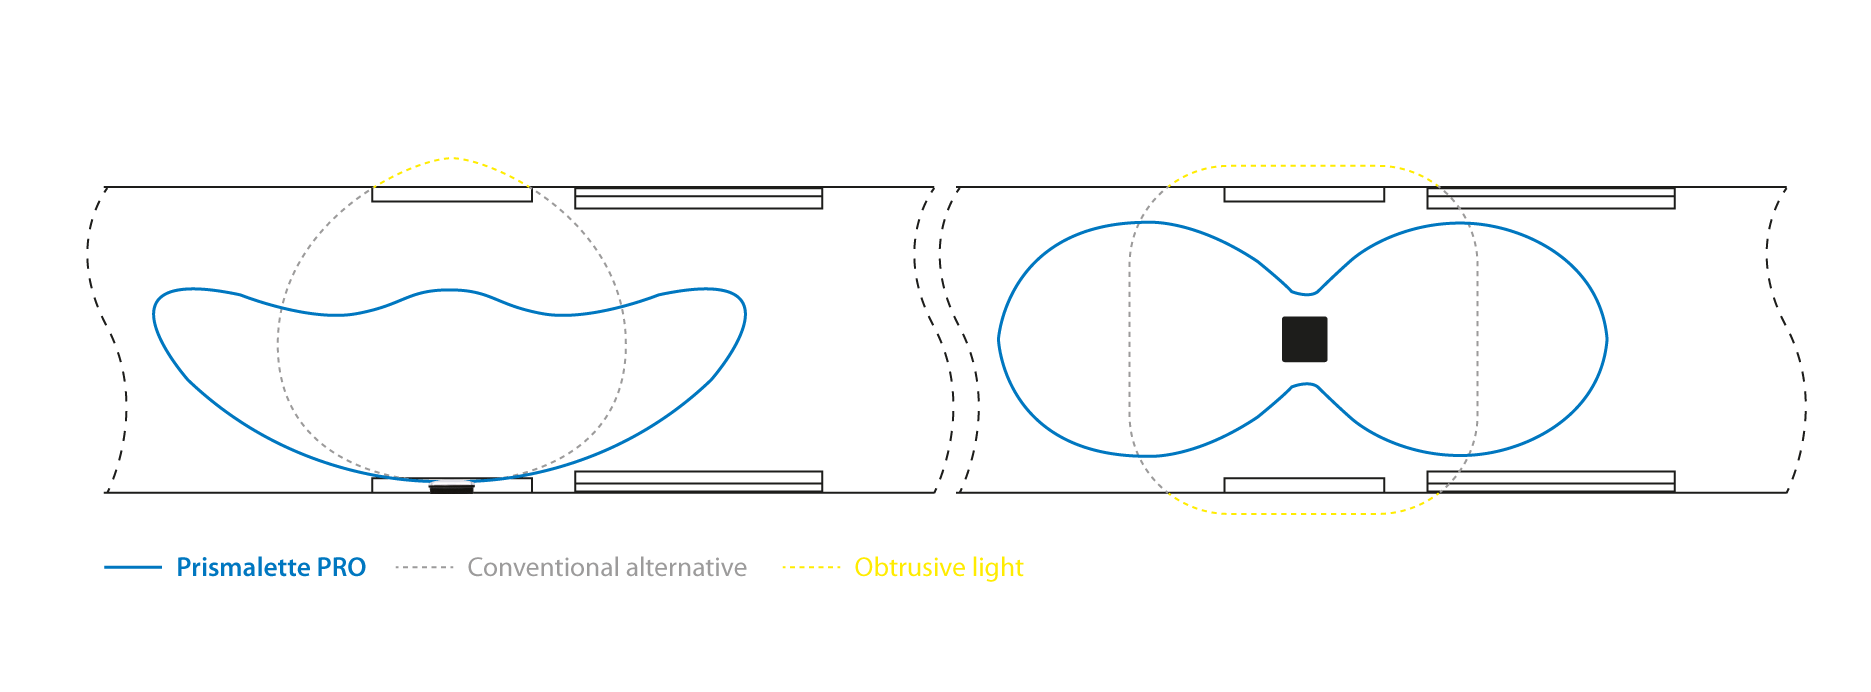 Reduced obstruction light distribution